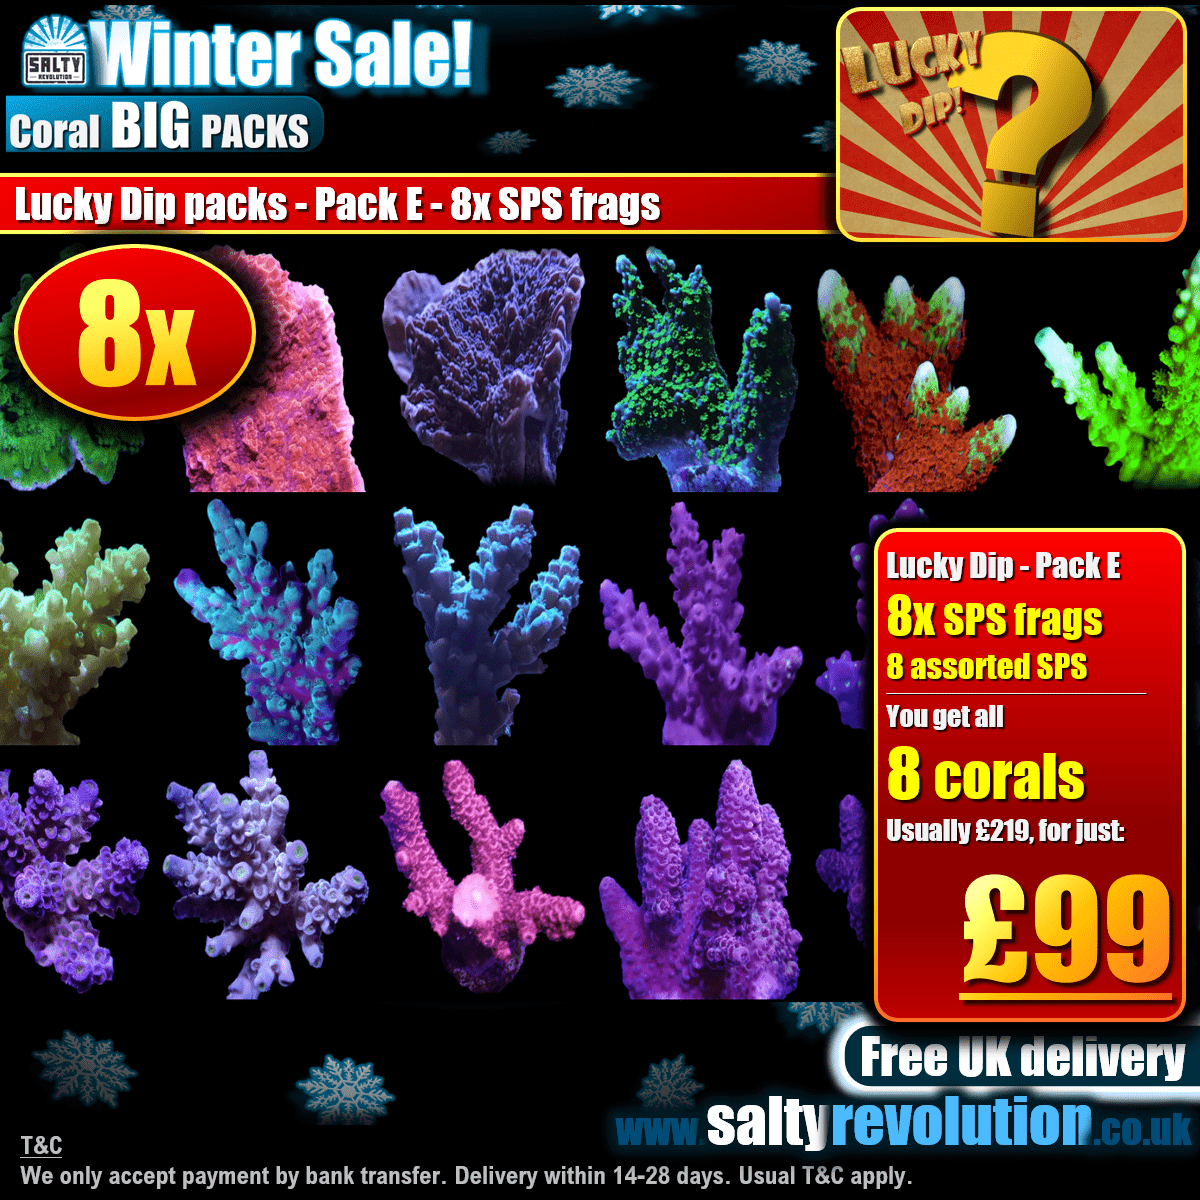 Winter Sale - BIG PACKS - Lucky Dip packs! - Pack E - 8x SPS frags £99